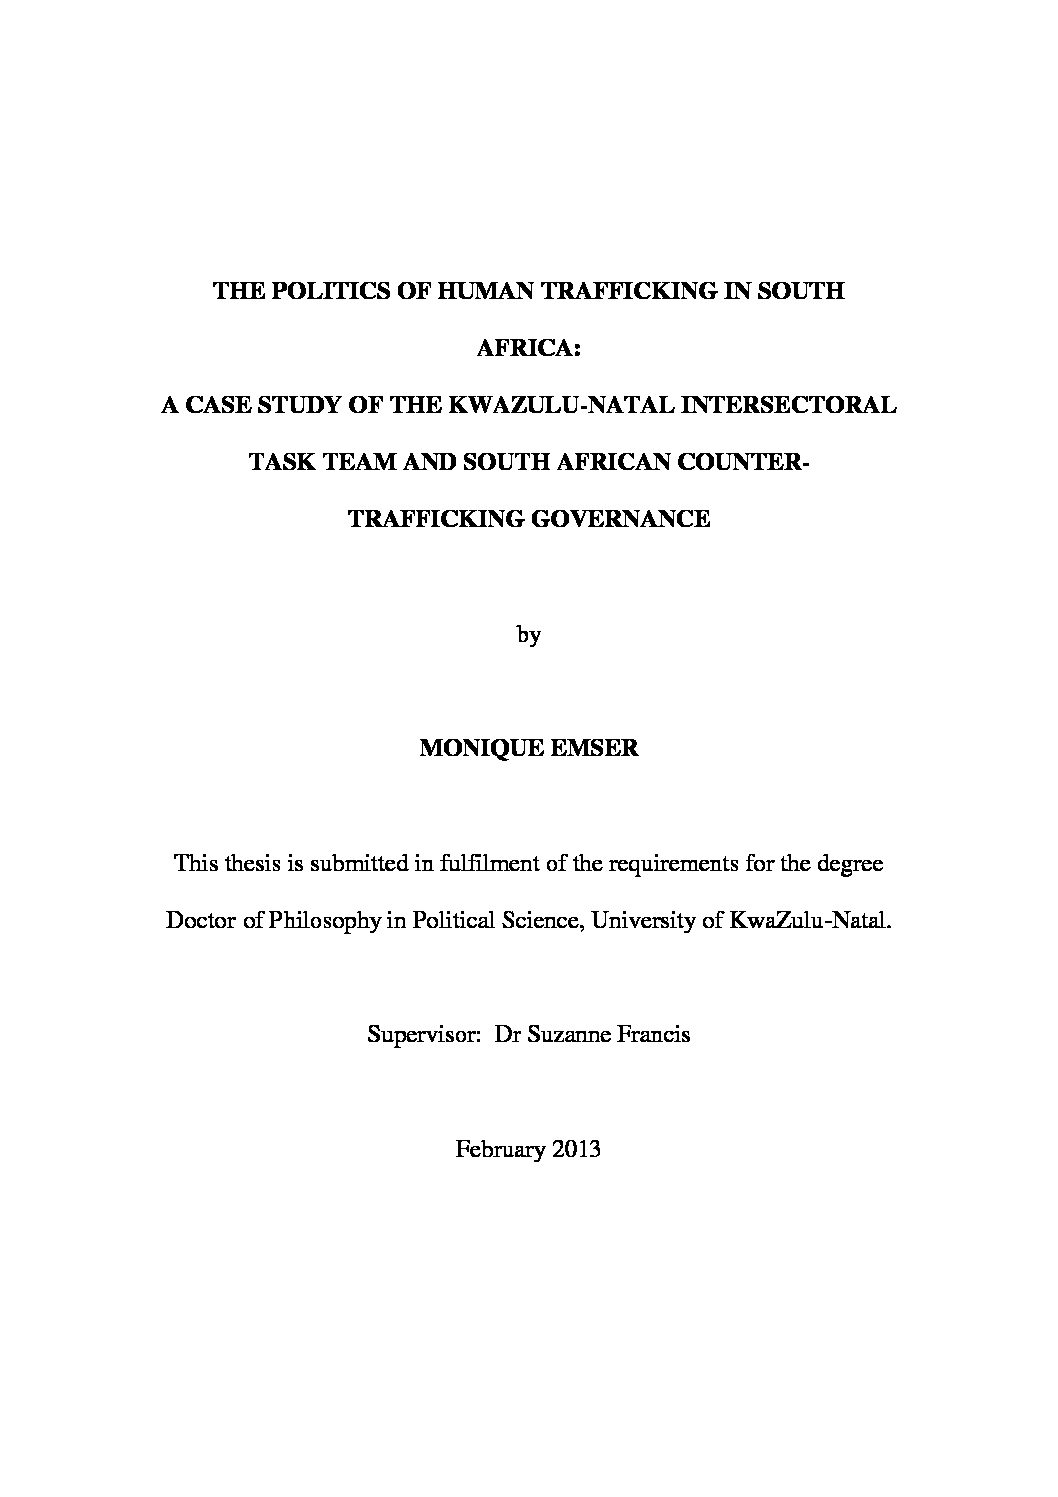 human trafficking dissertation pdf